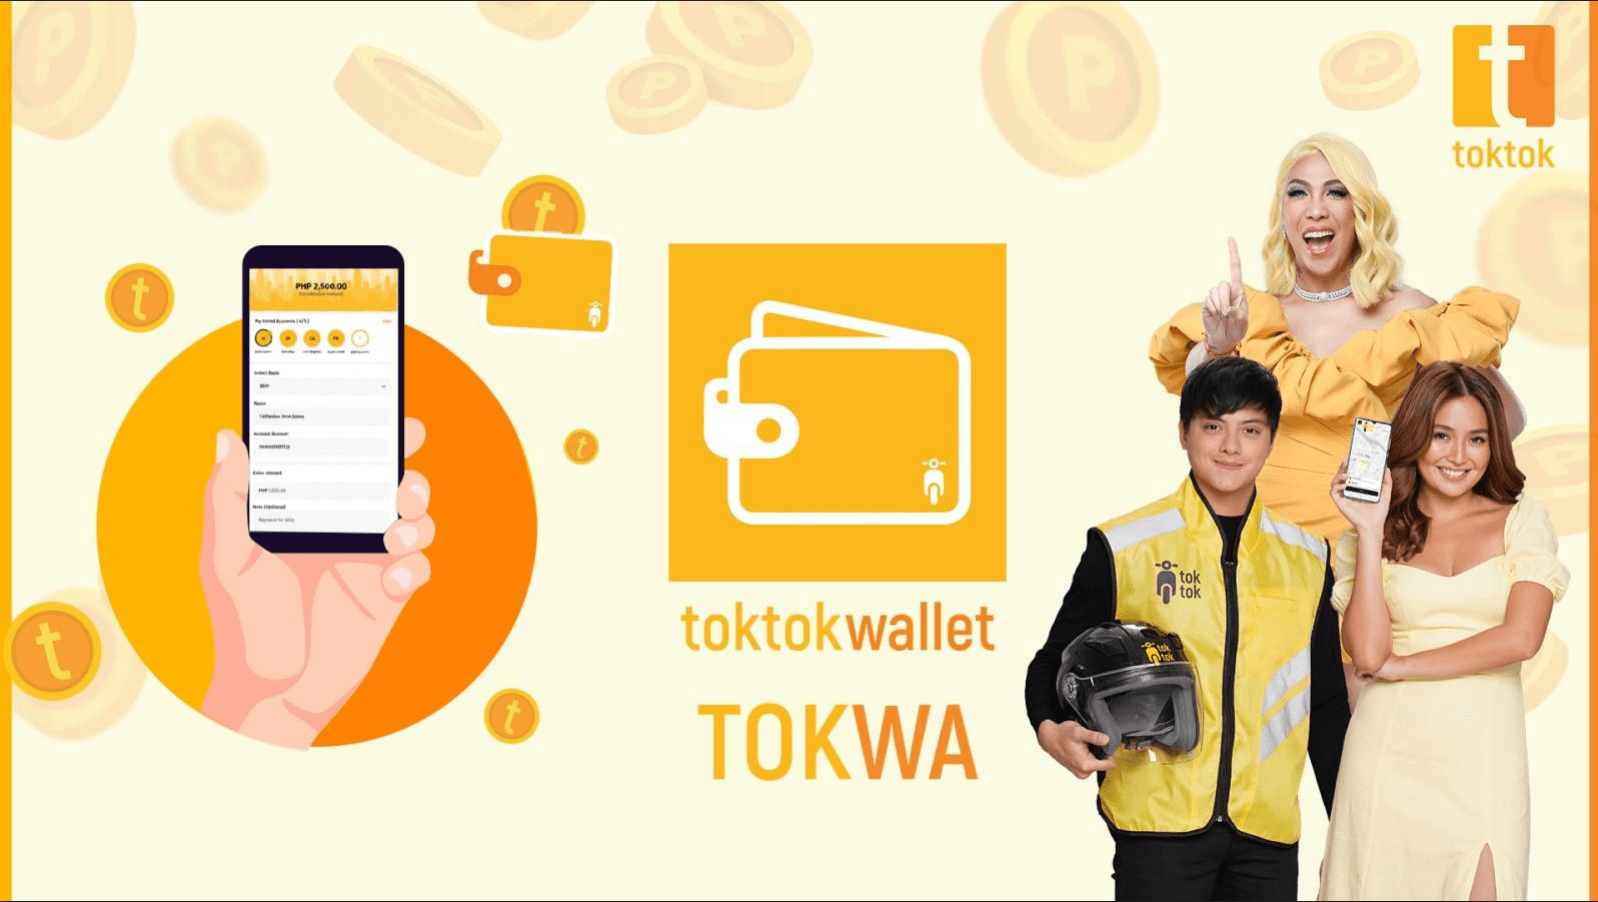 How to create toktok wallet account